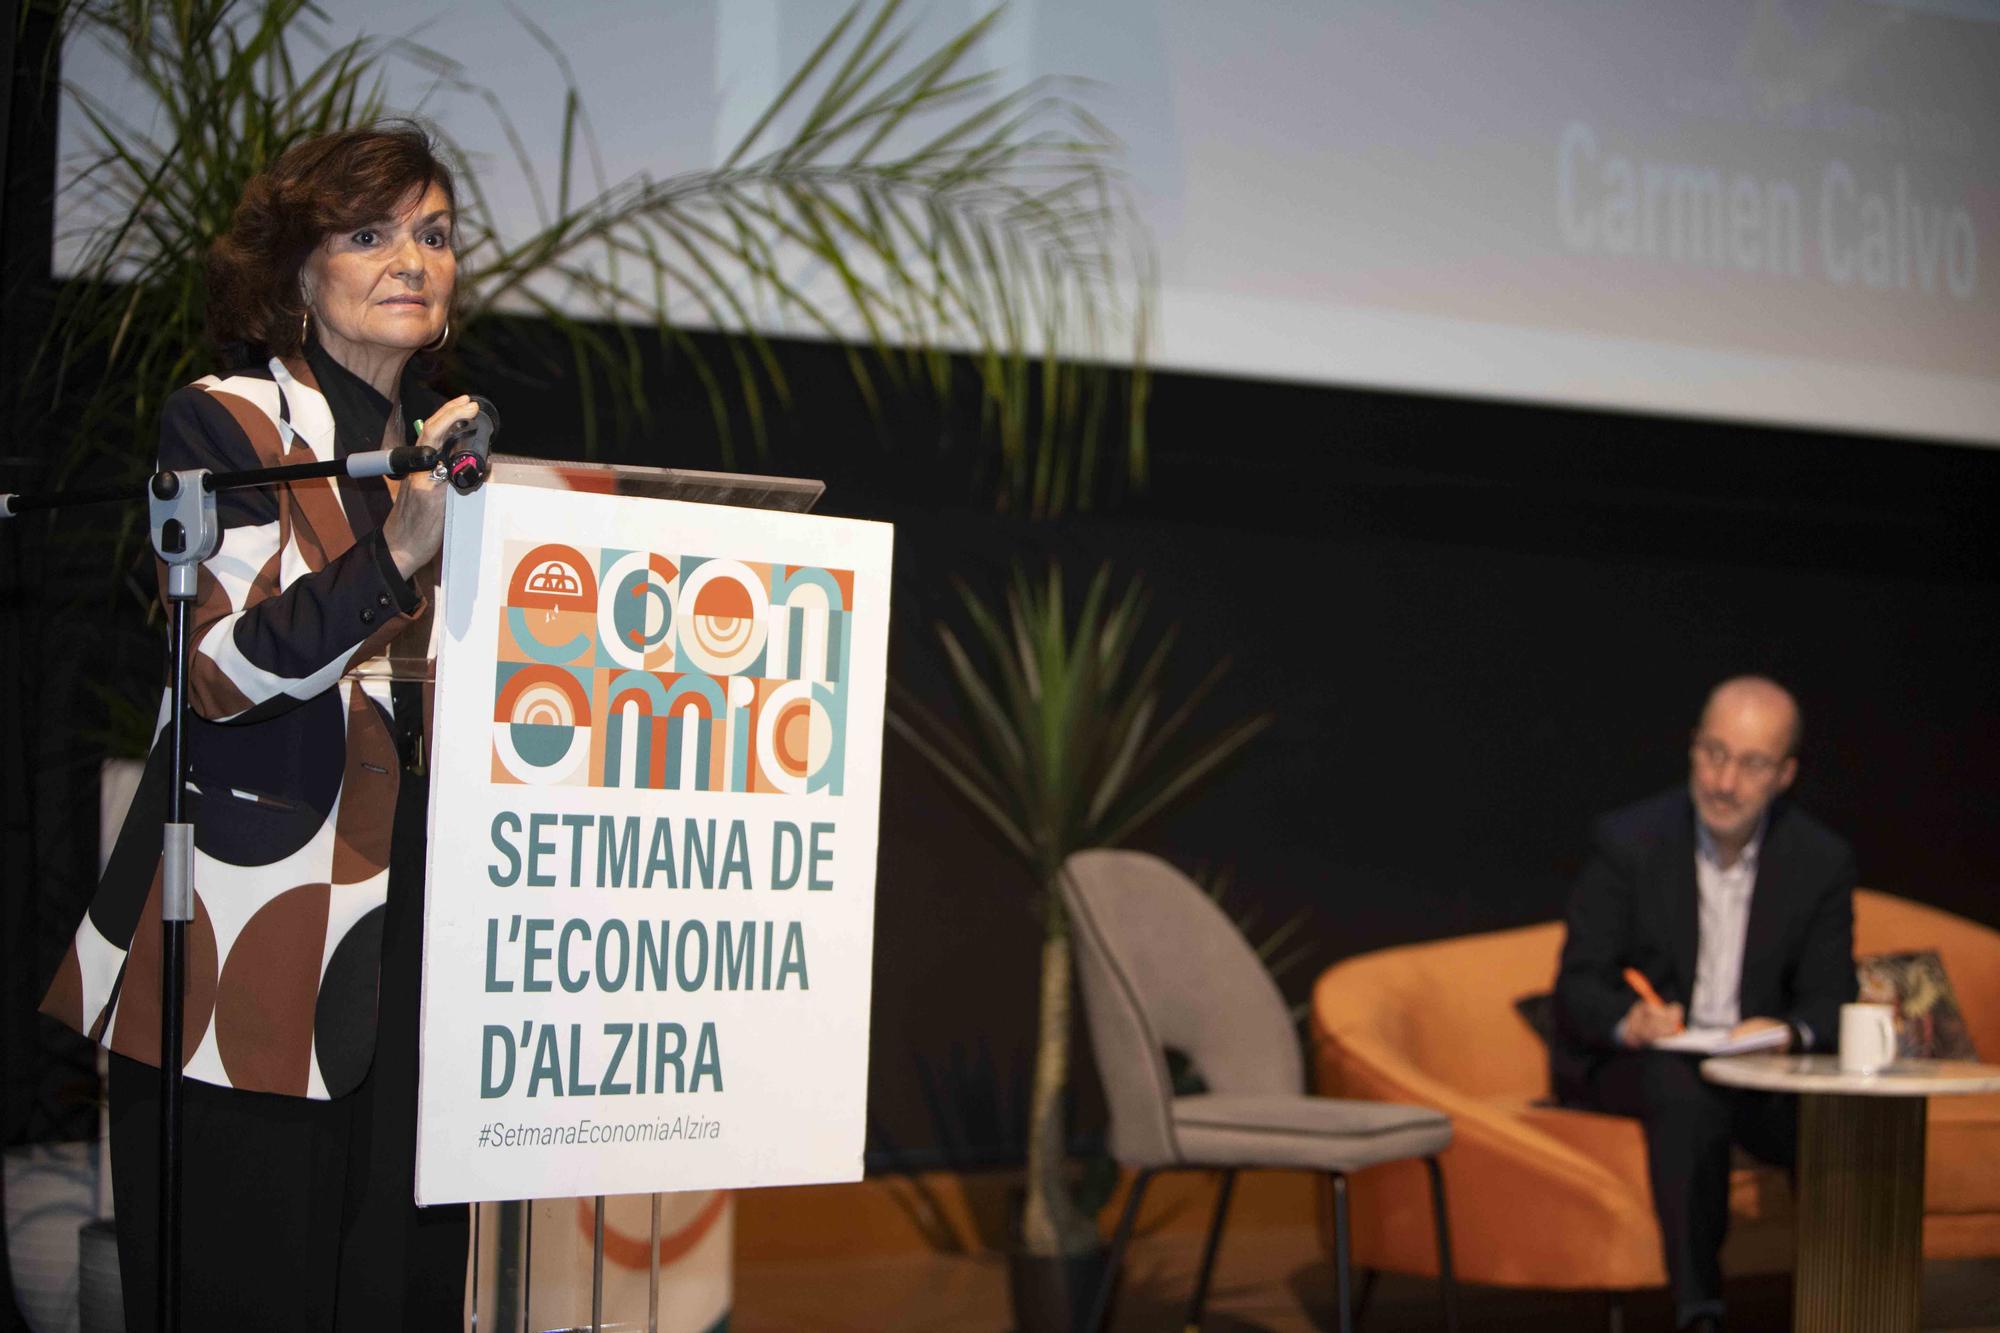 Aitana Mas y Carmen Calvo dan el pistoletazo de salida a la Semana de la Economía de Alzira